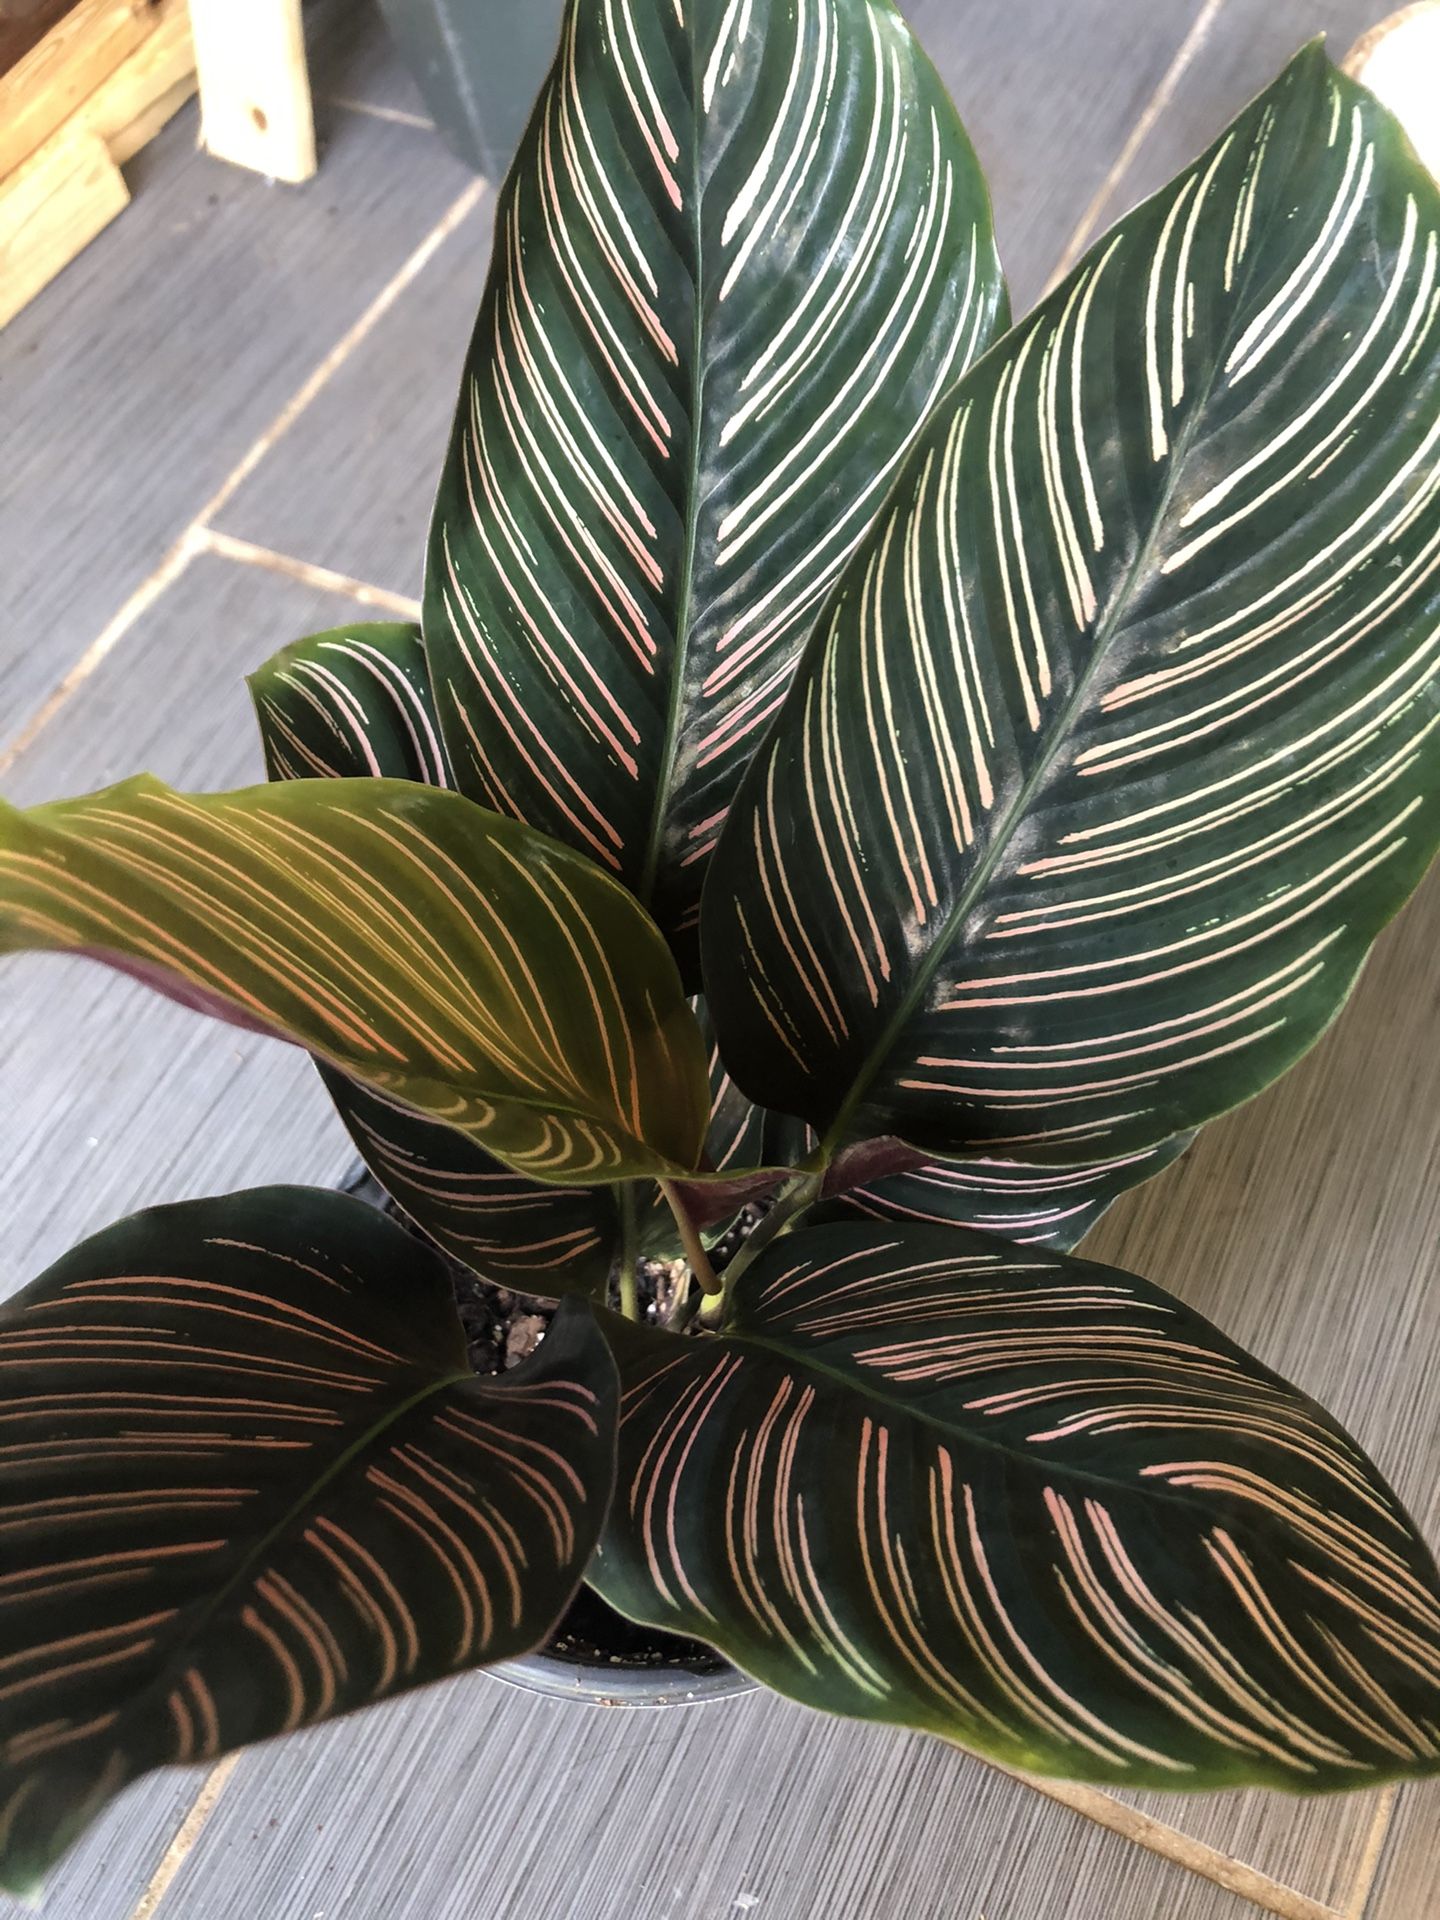 Calathea ornata live indoor plant